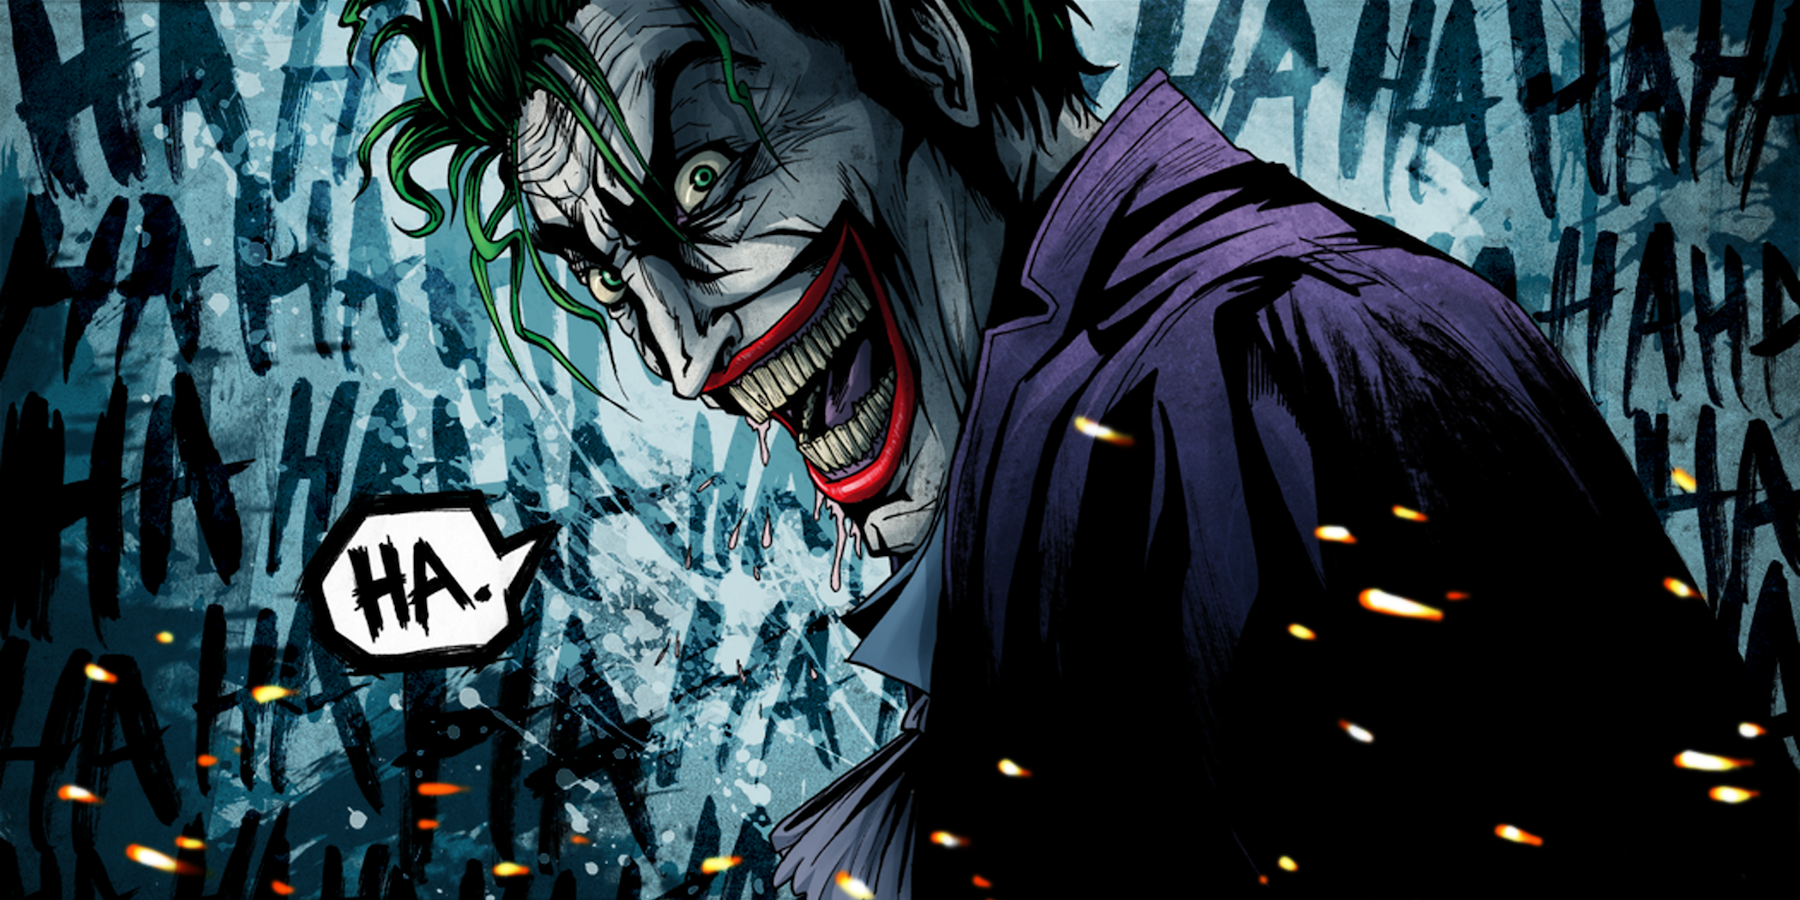 Joker laughing maniacally in DC Comics.